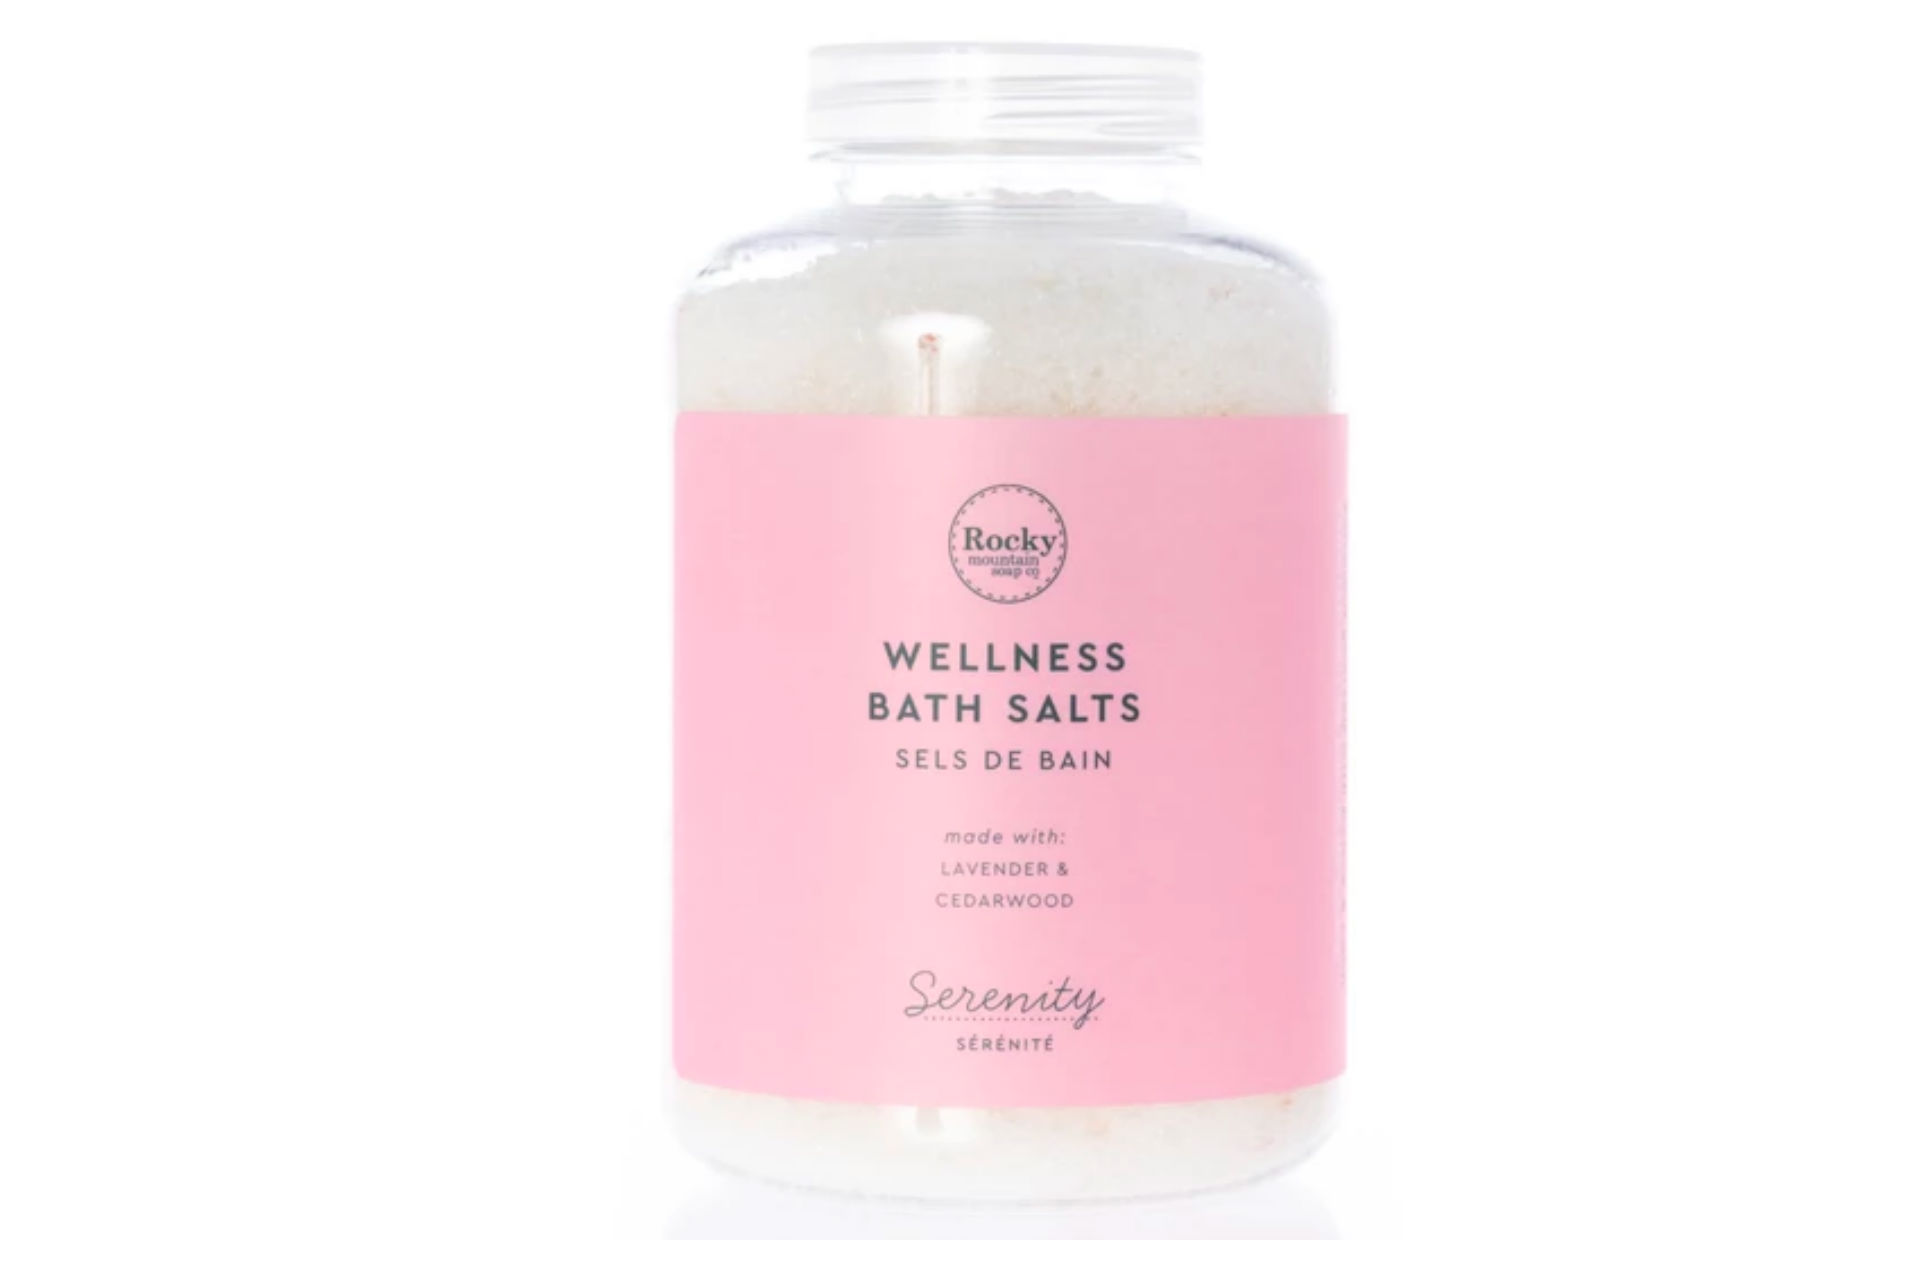 Serenity wellness bath salts